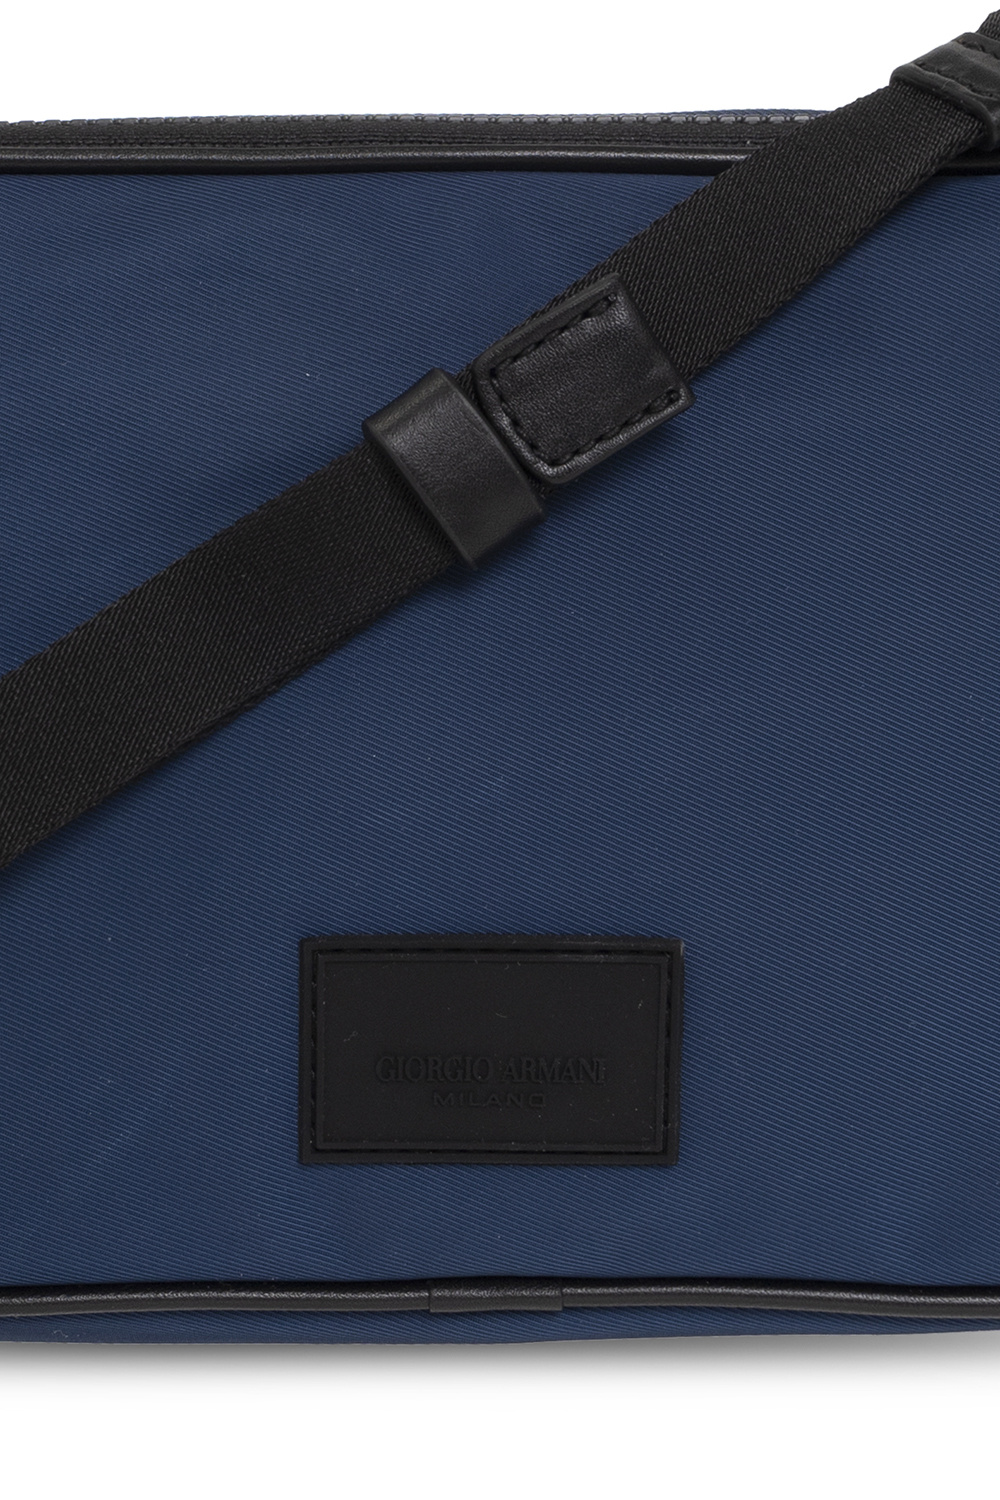 Giorgio Armani ‘Sustainable’ collection Bluza bag